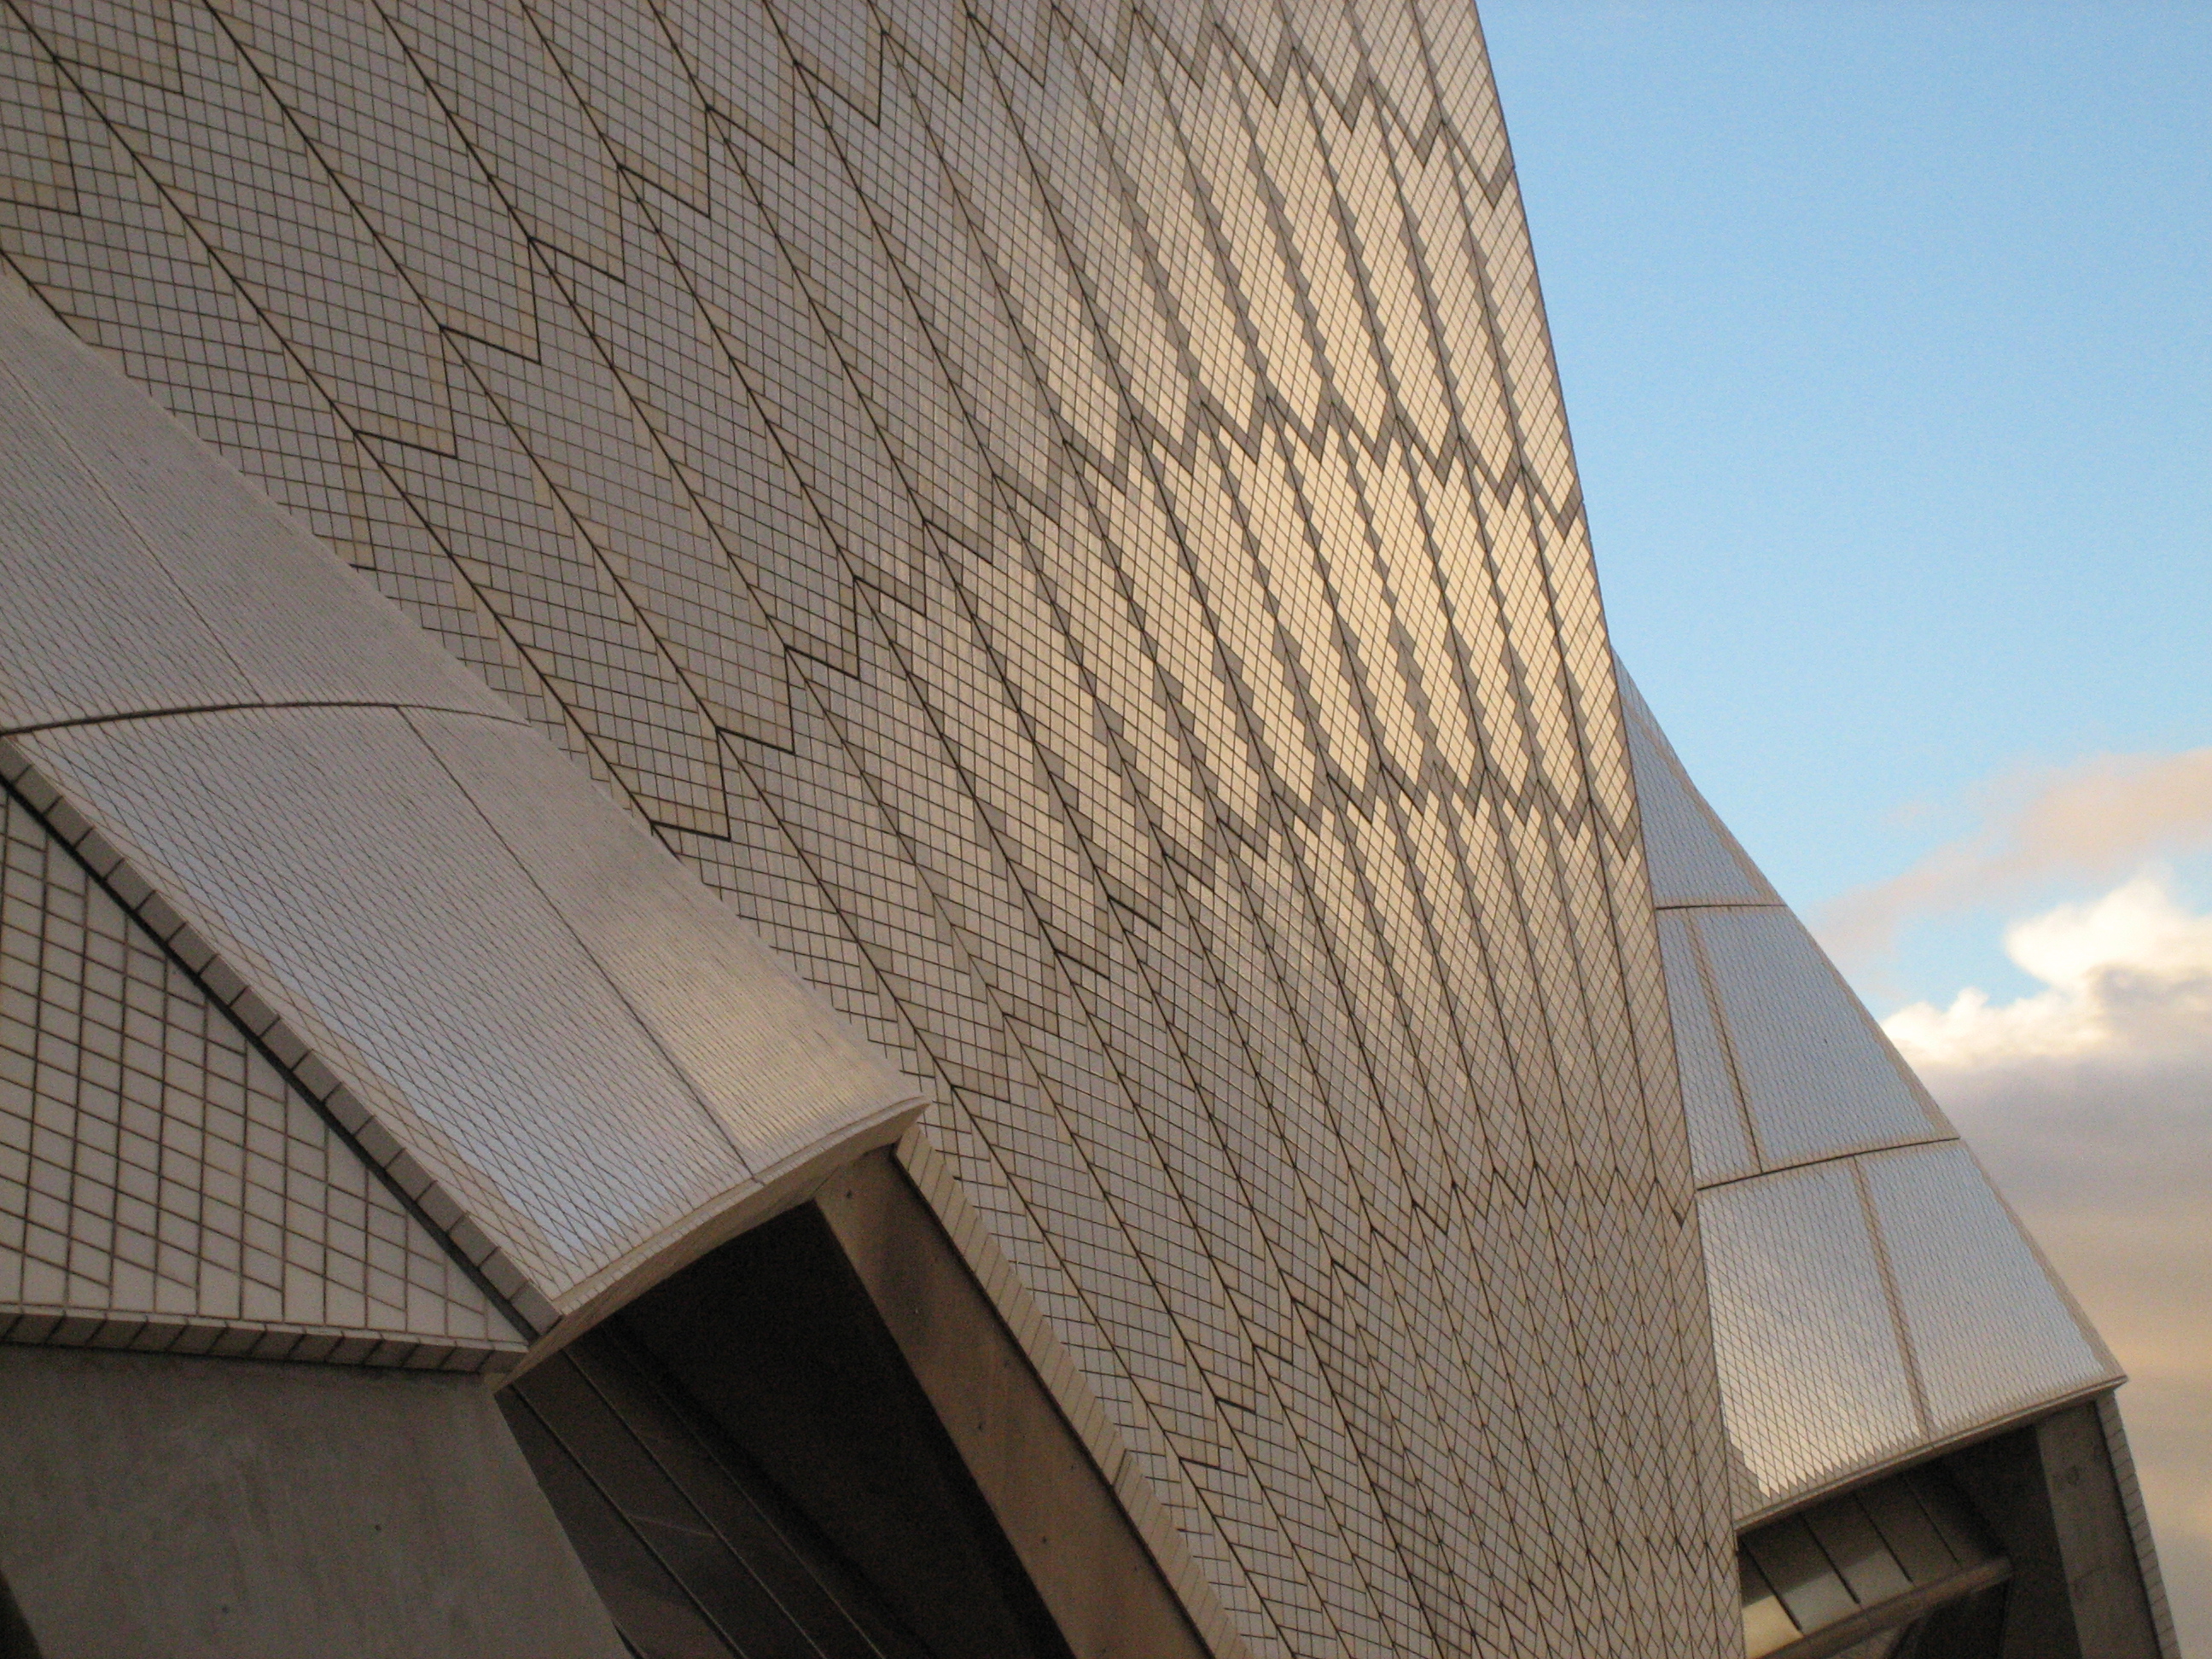 The Ceramic tiles of the Sydney opera house.